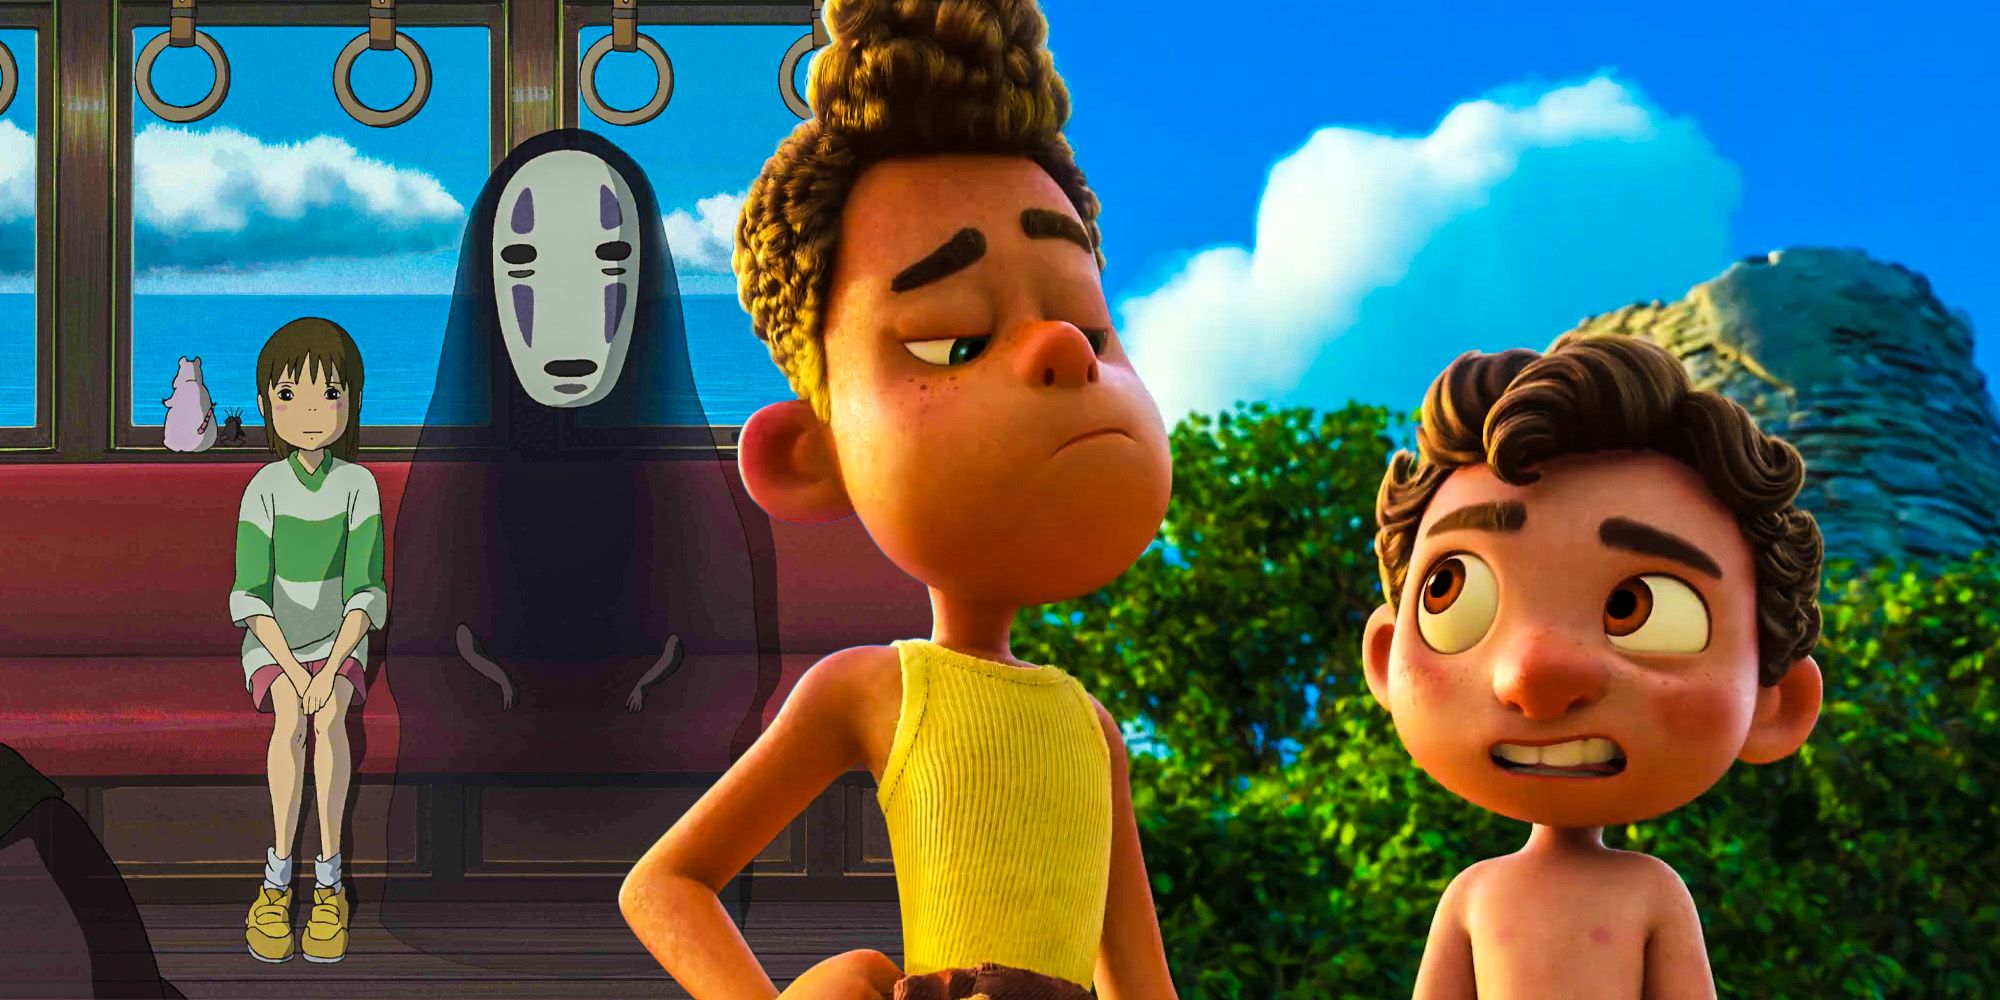 Studio Ghibli spirited away Inspired the Pixar Movie luca